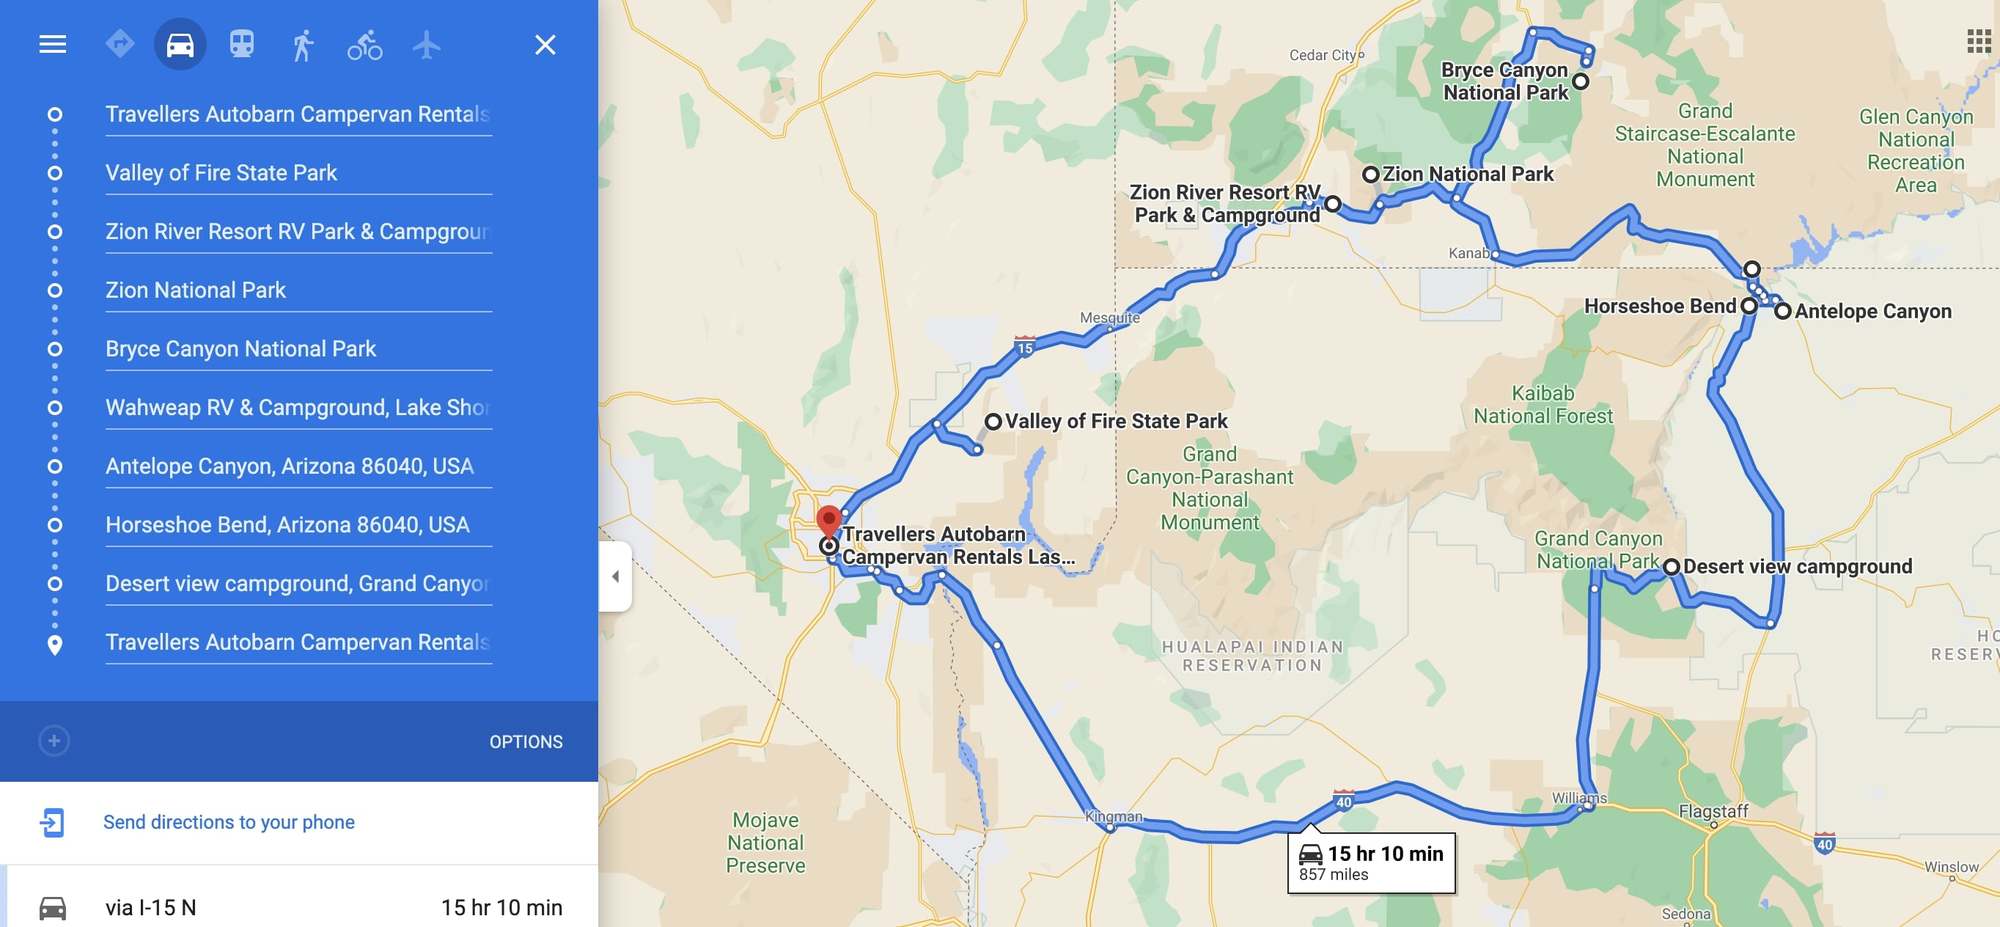 Las Vegas to Grand Canyon Map